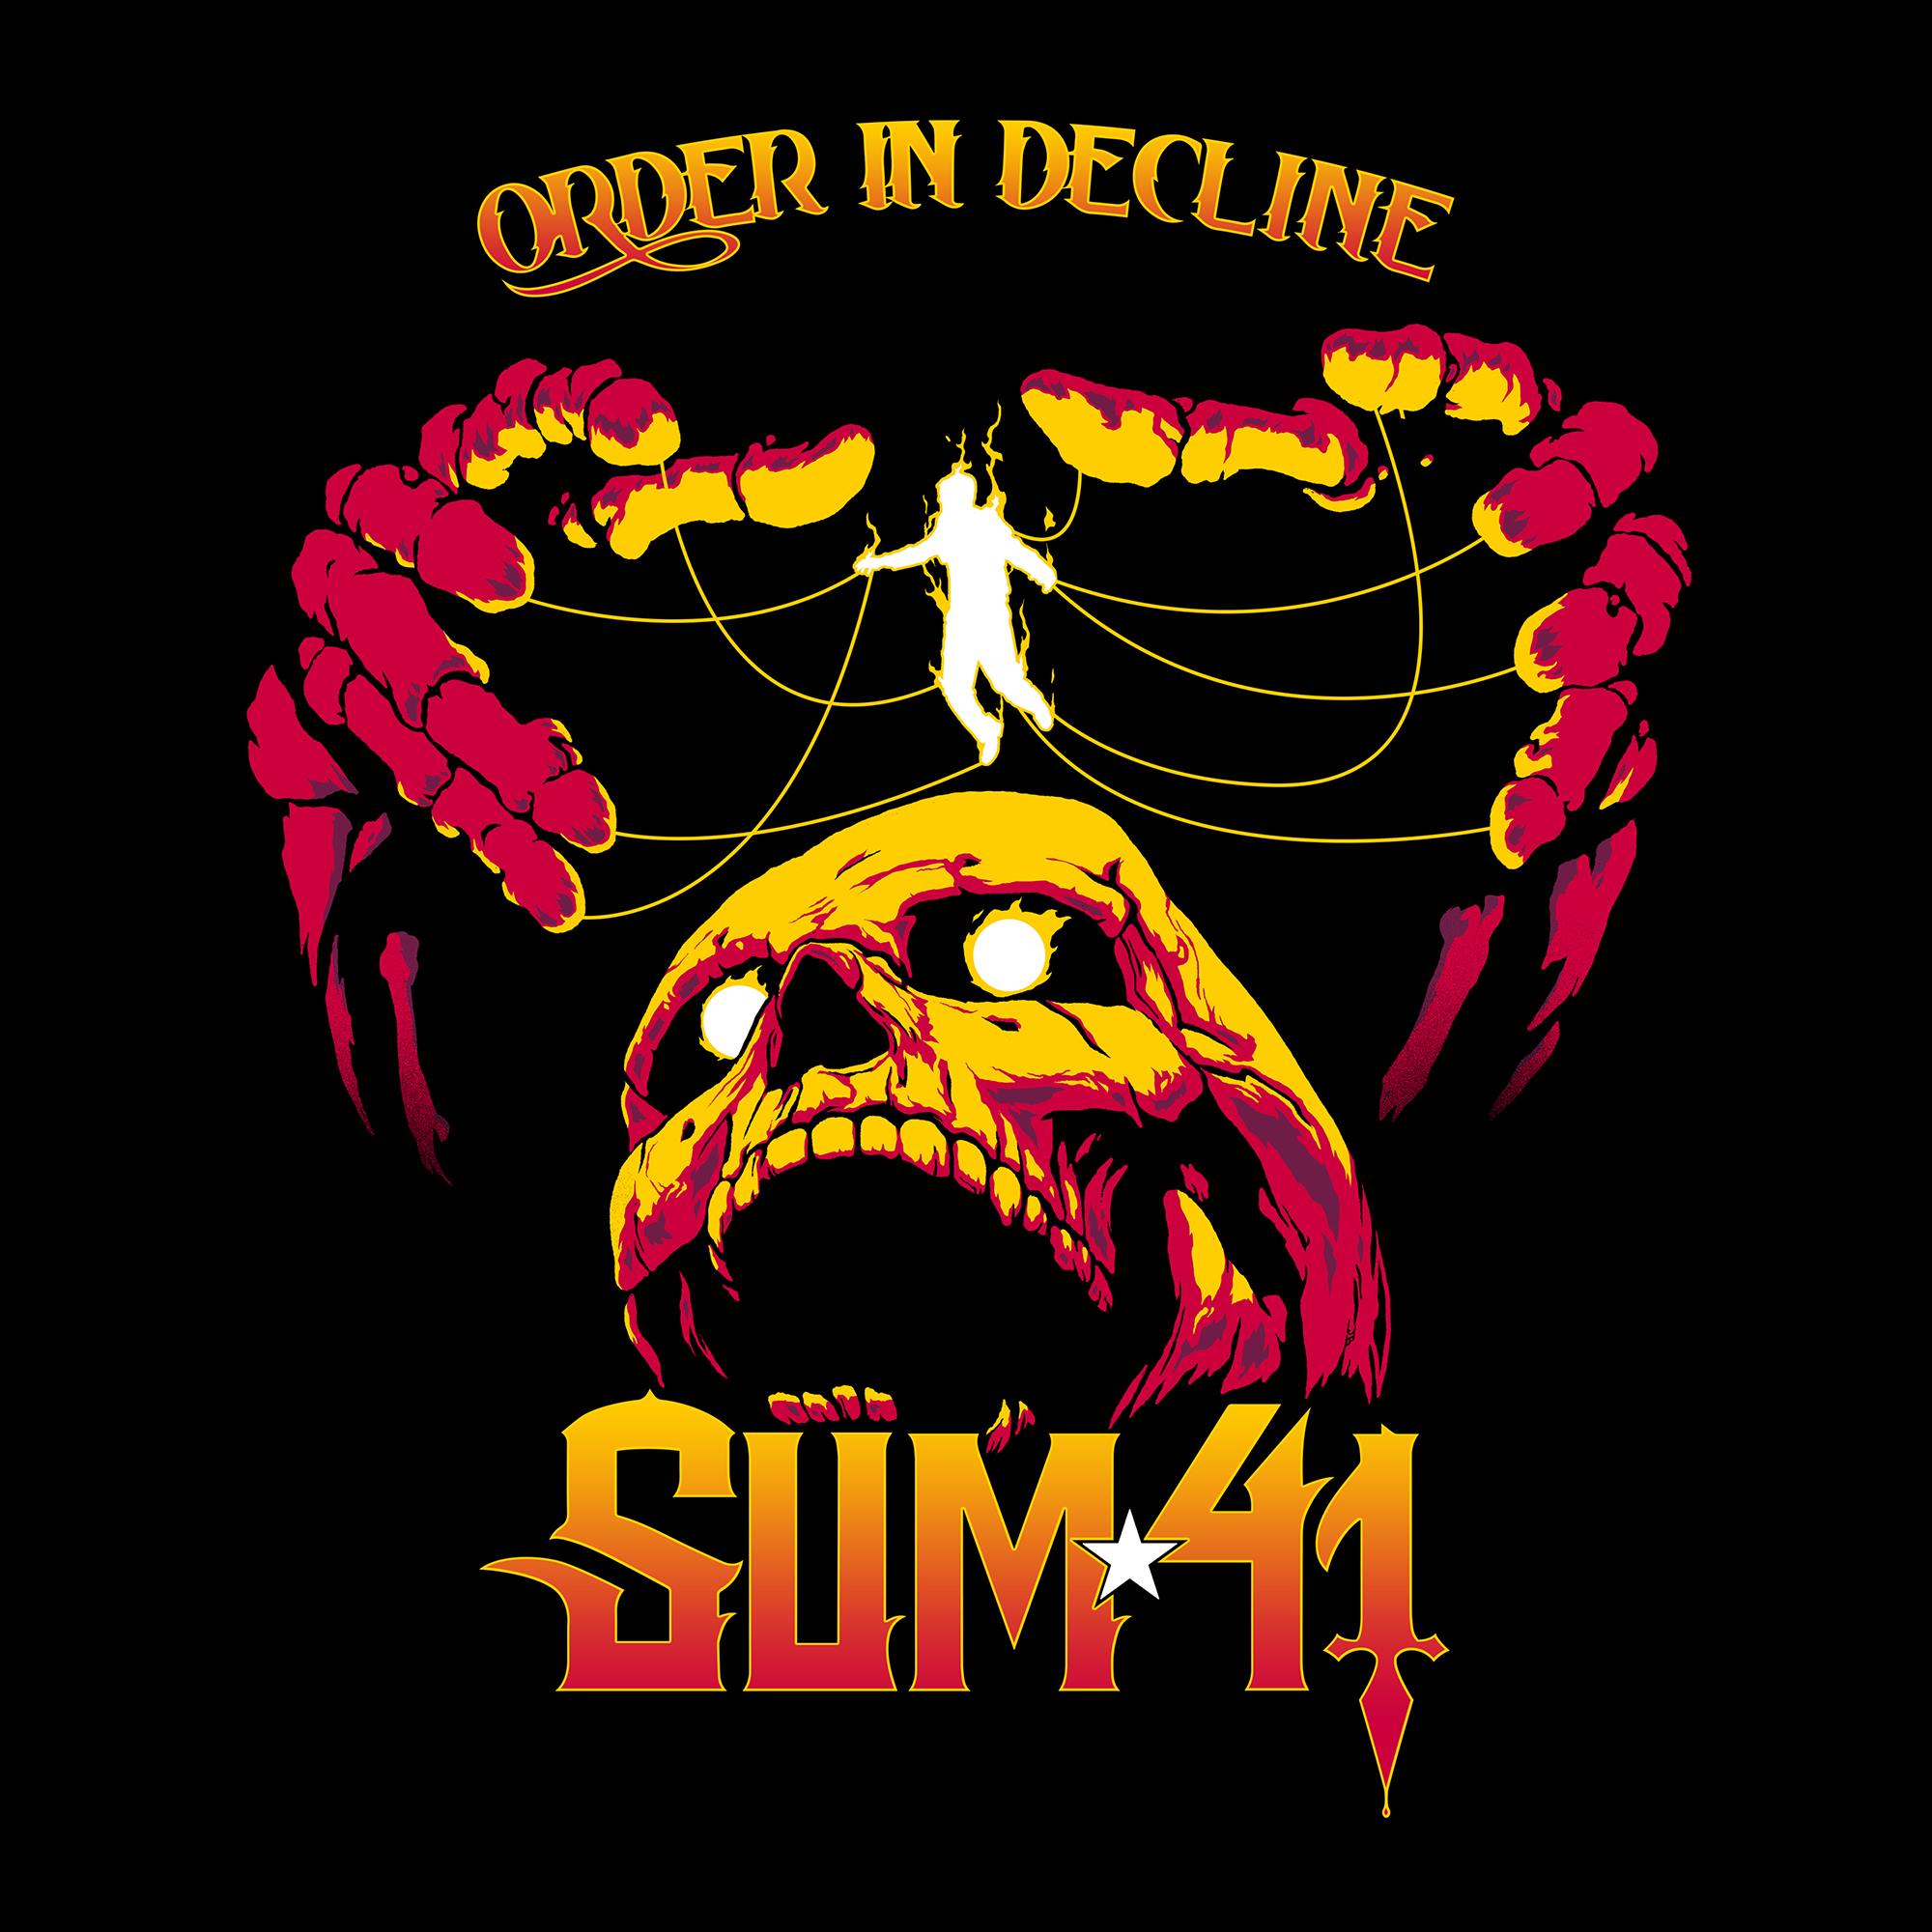 sum 41 order in decline cover